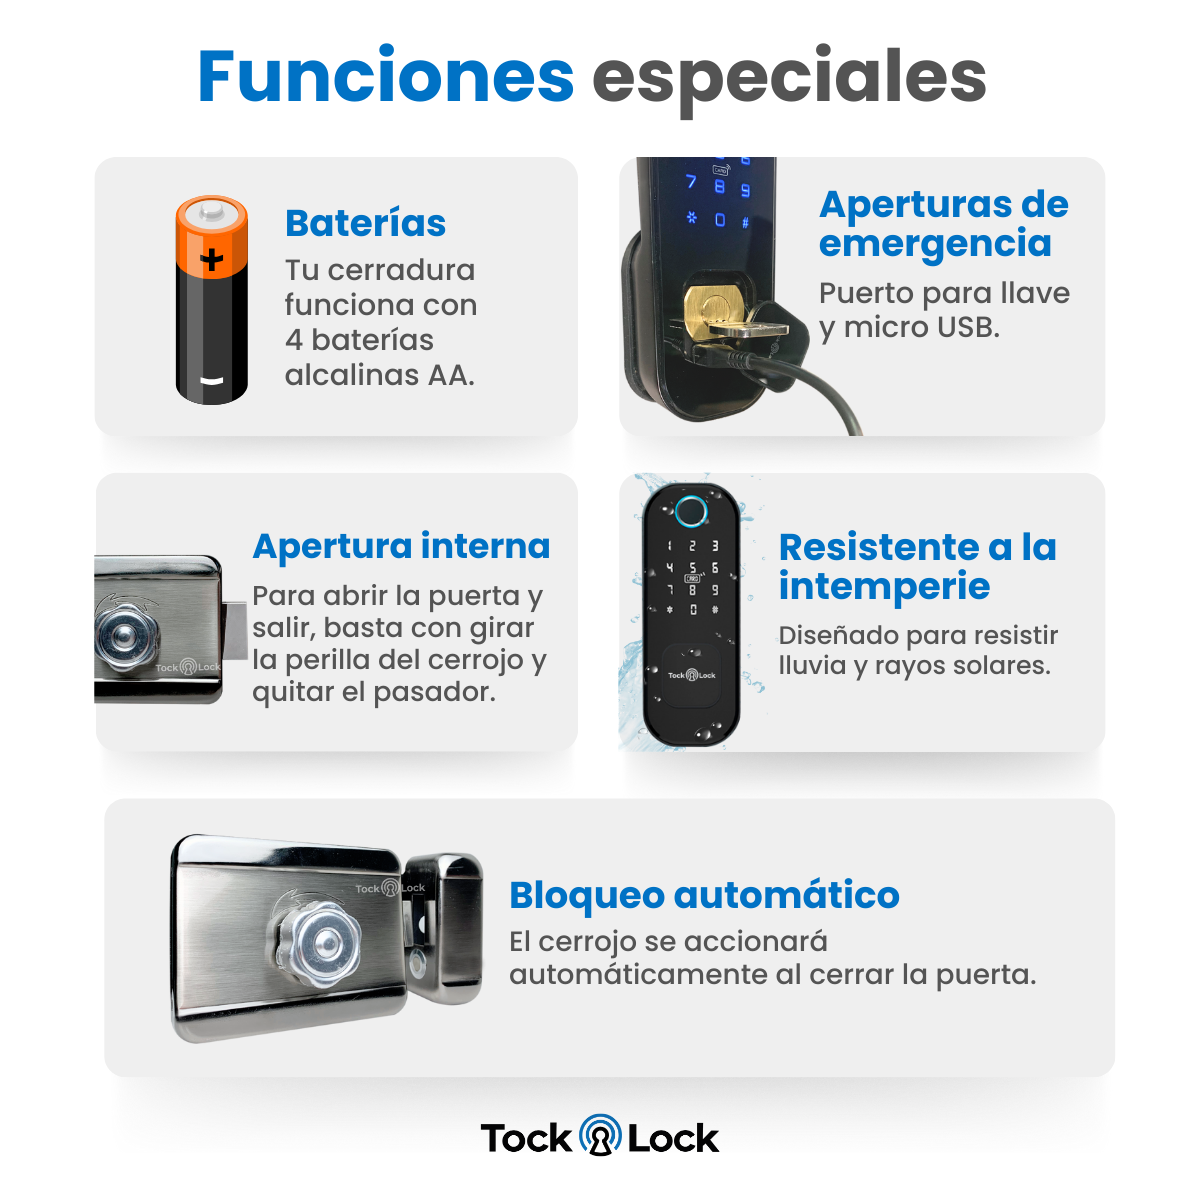 Cerradura biometrica inteligente Liz Safe XL +TTLOCK + Cerrojo adicional